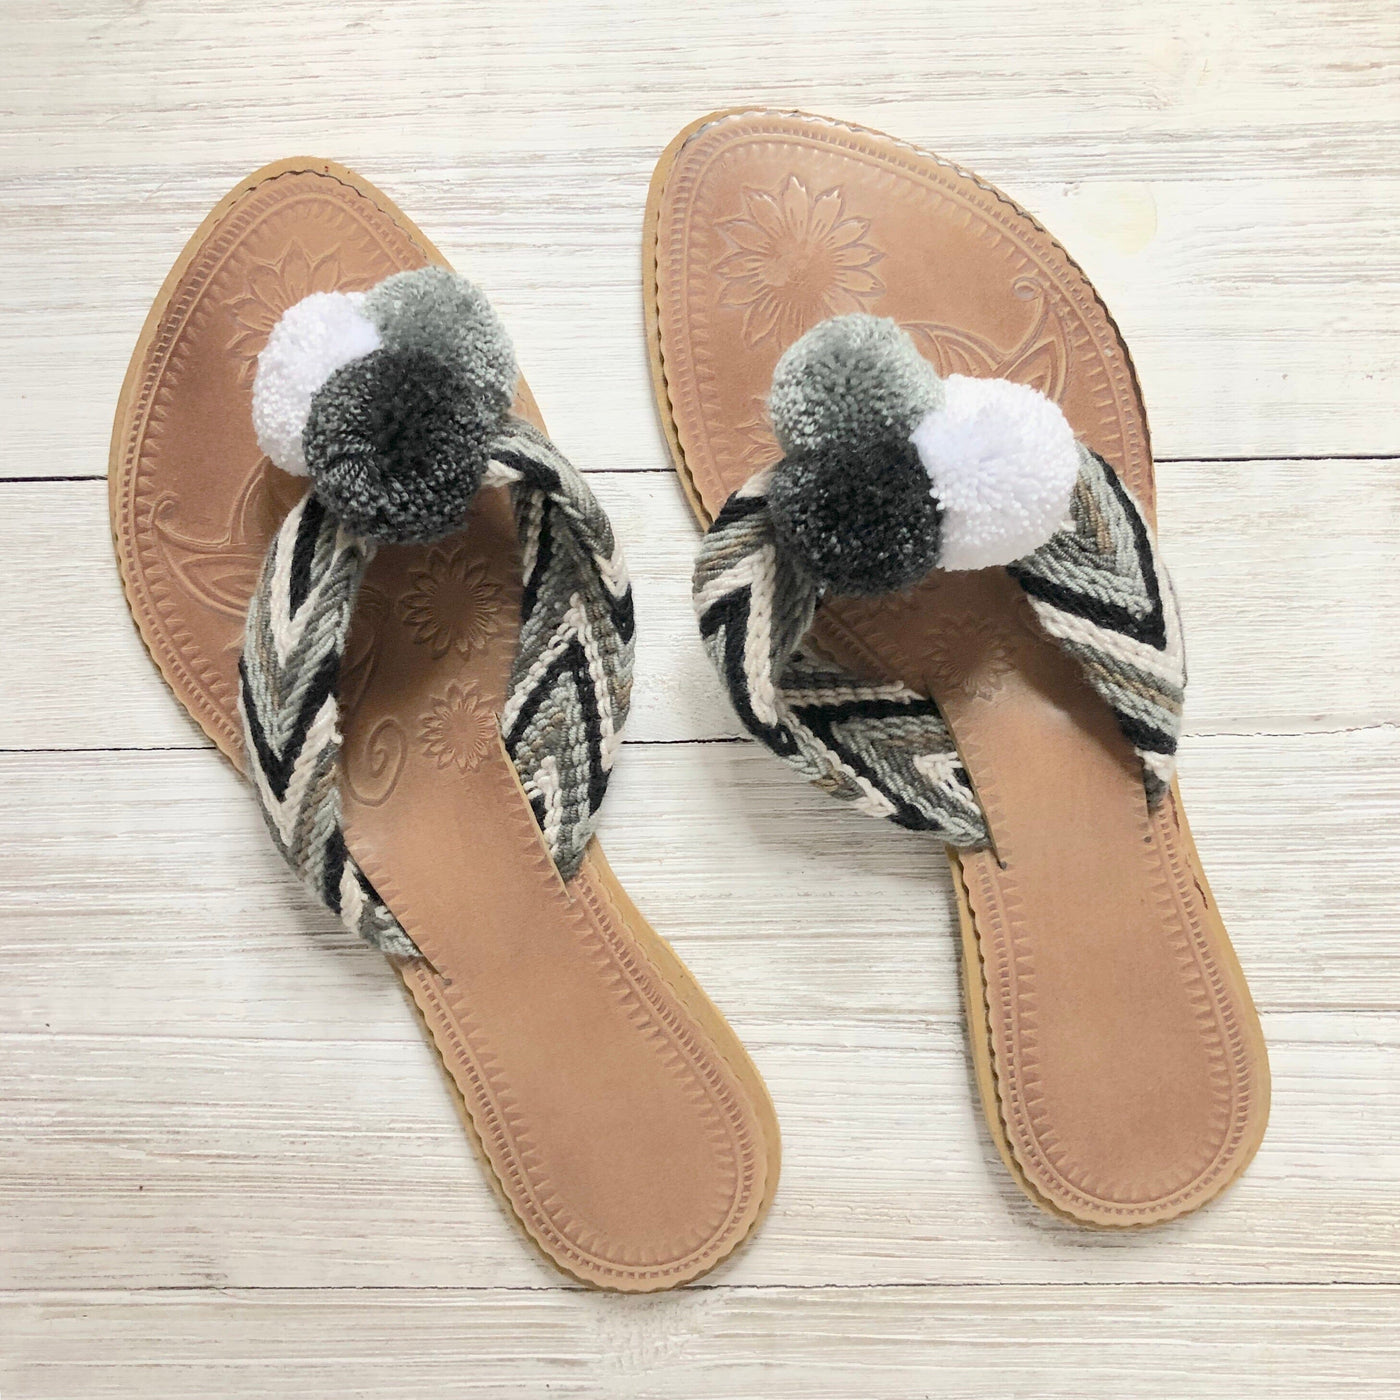 Black & White Pom Pom Sandals-Summer Flip Flops-Beach Slides-Flat Sandals